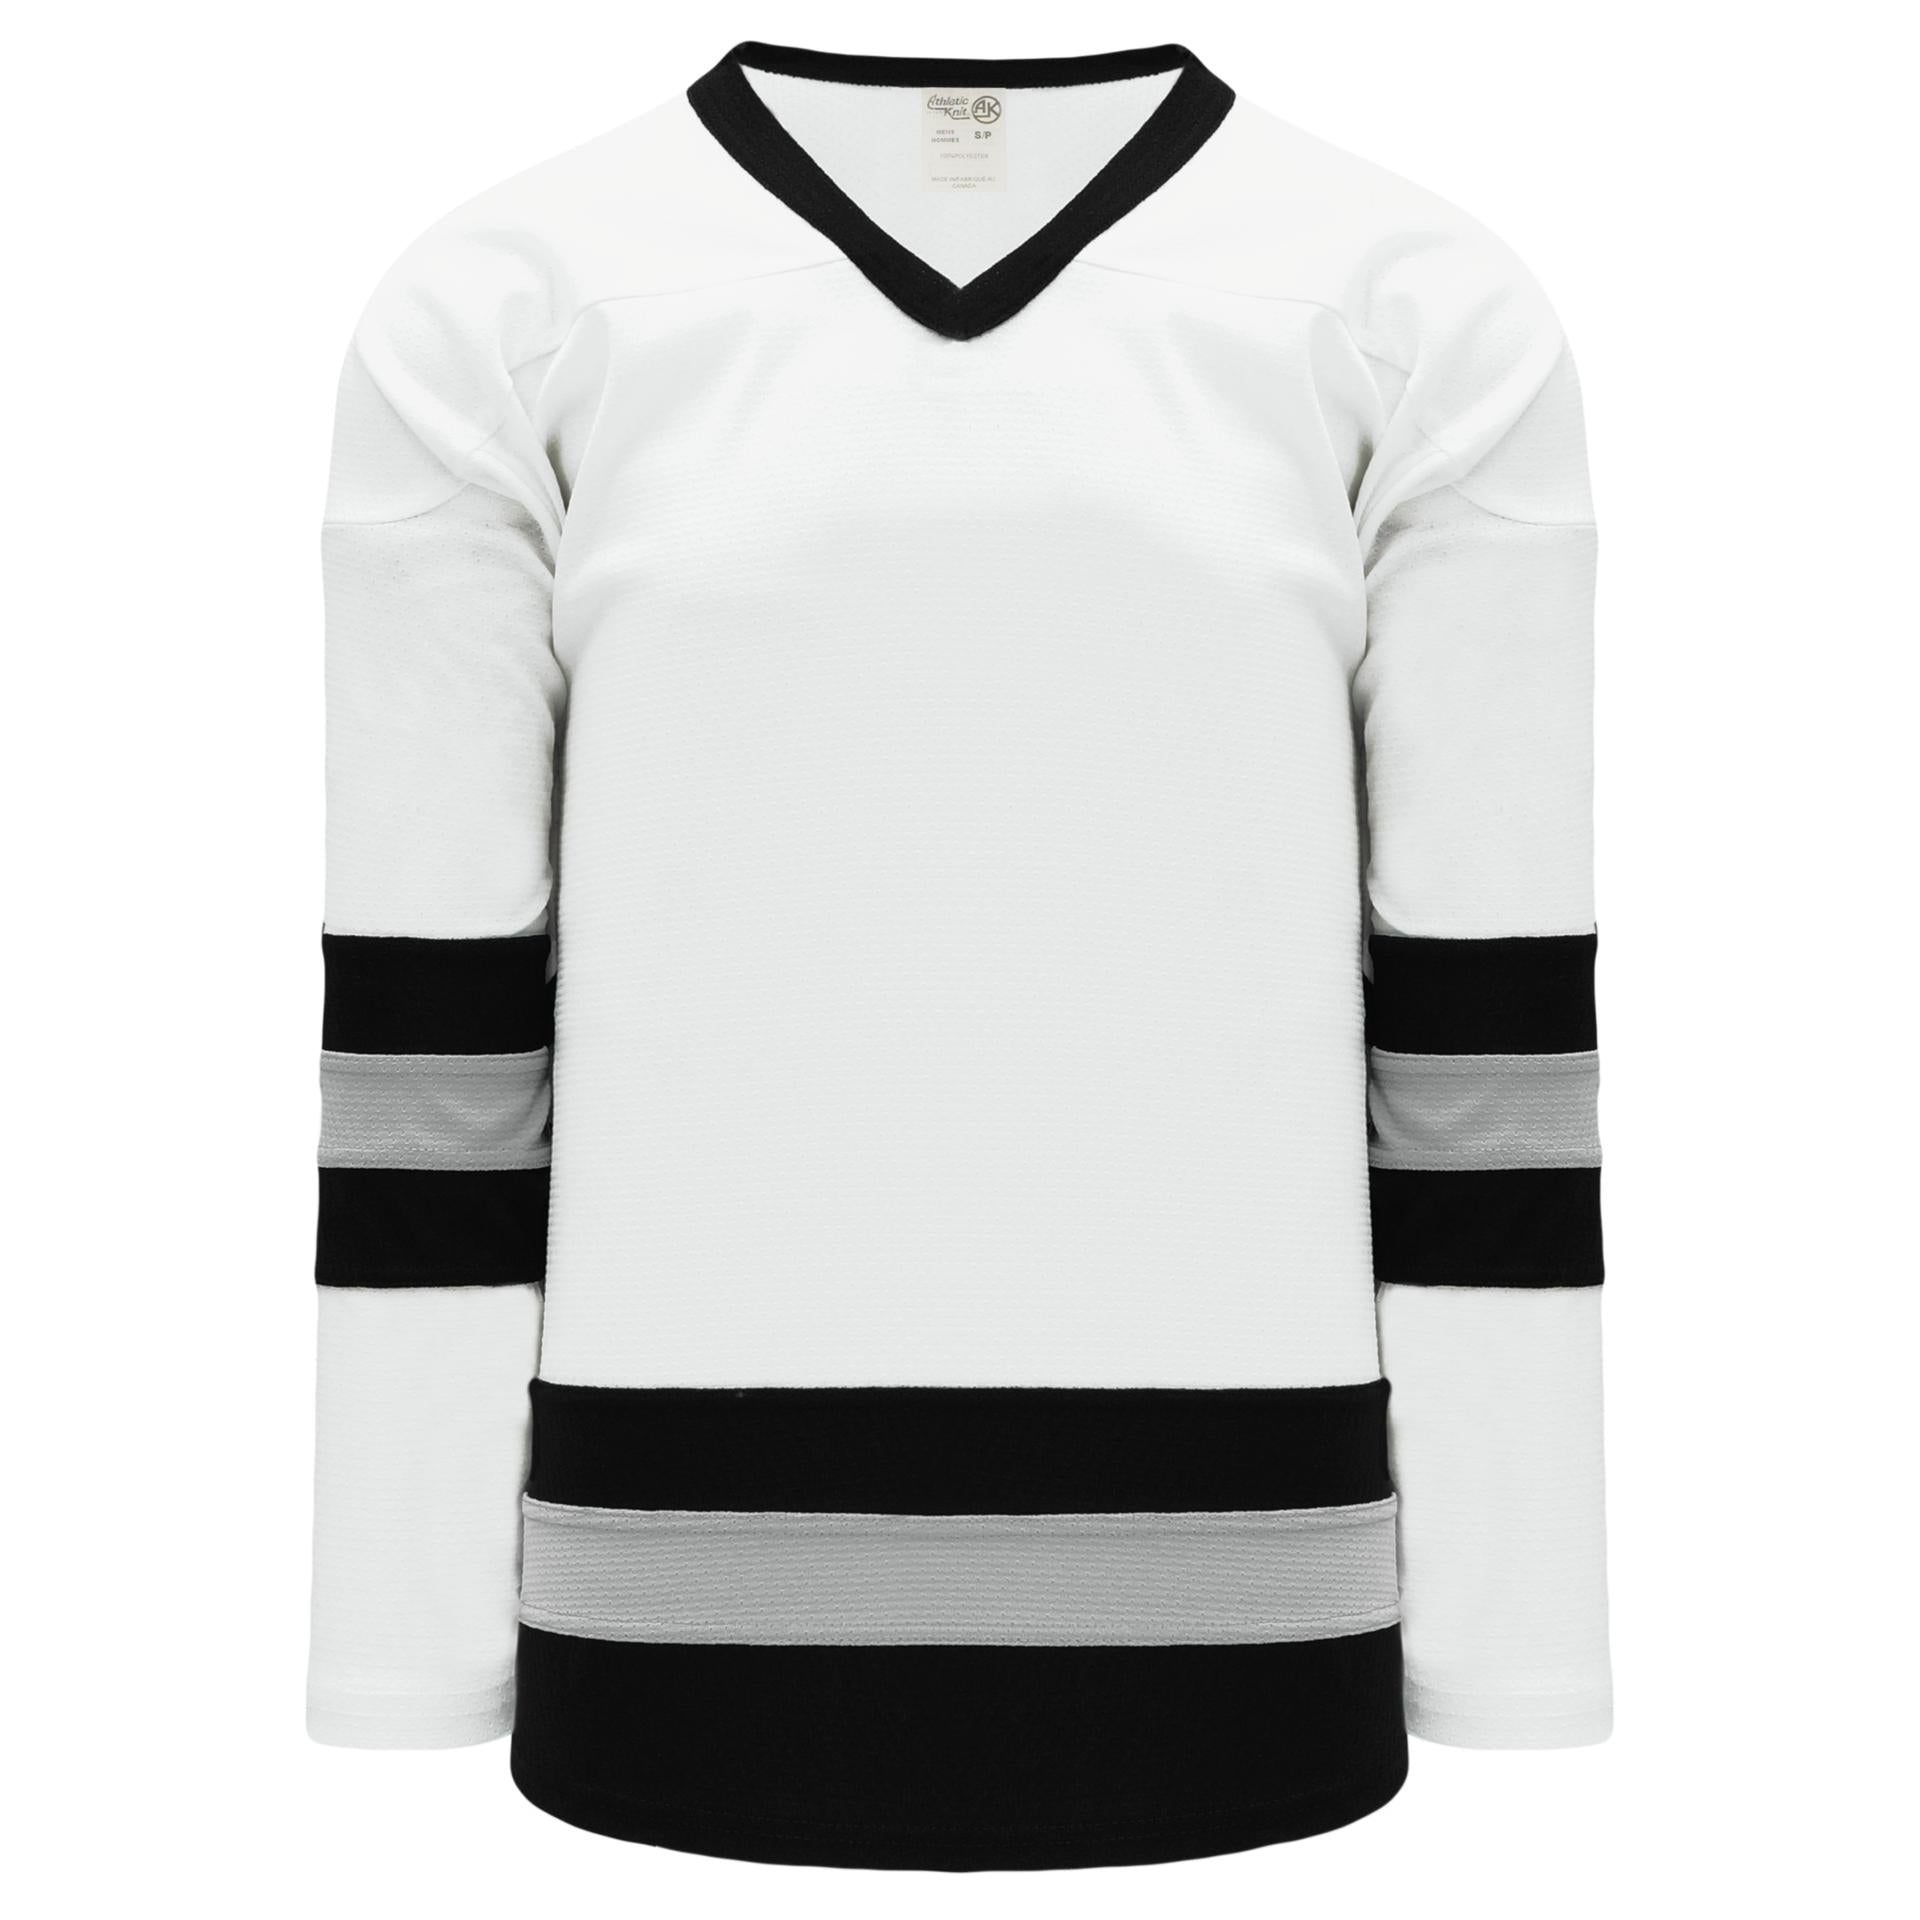 blank black hockey jersey